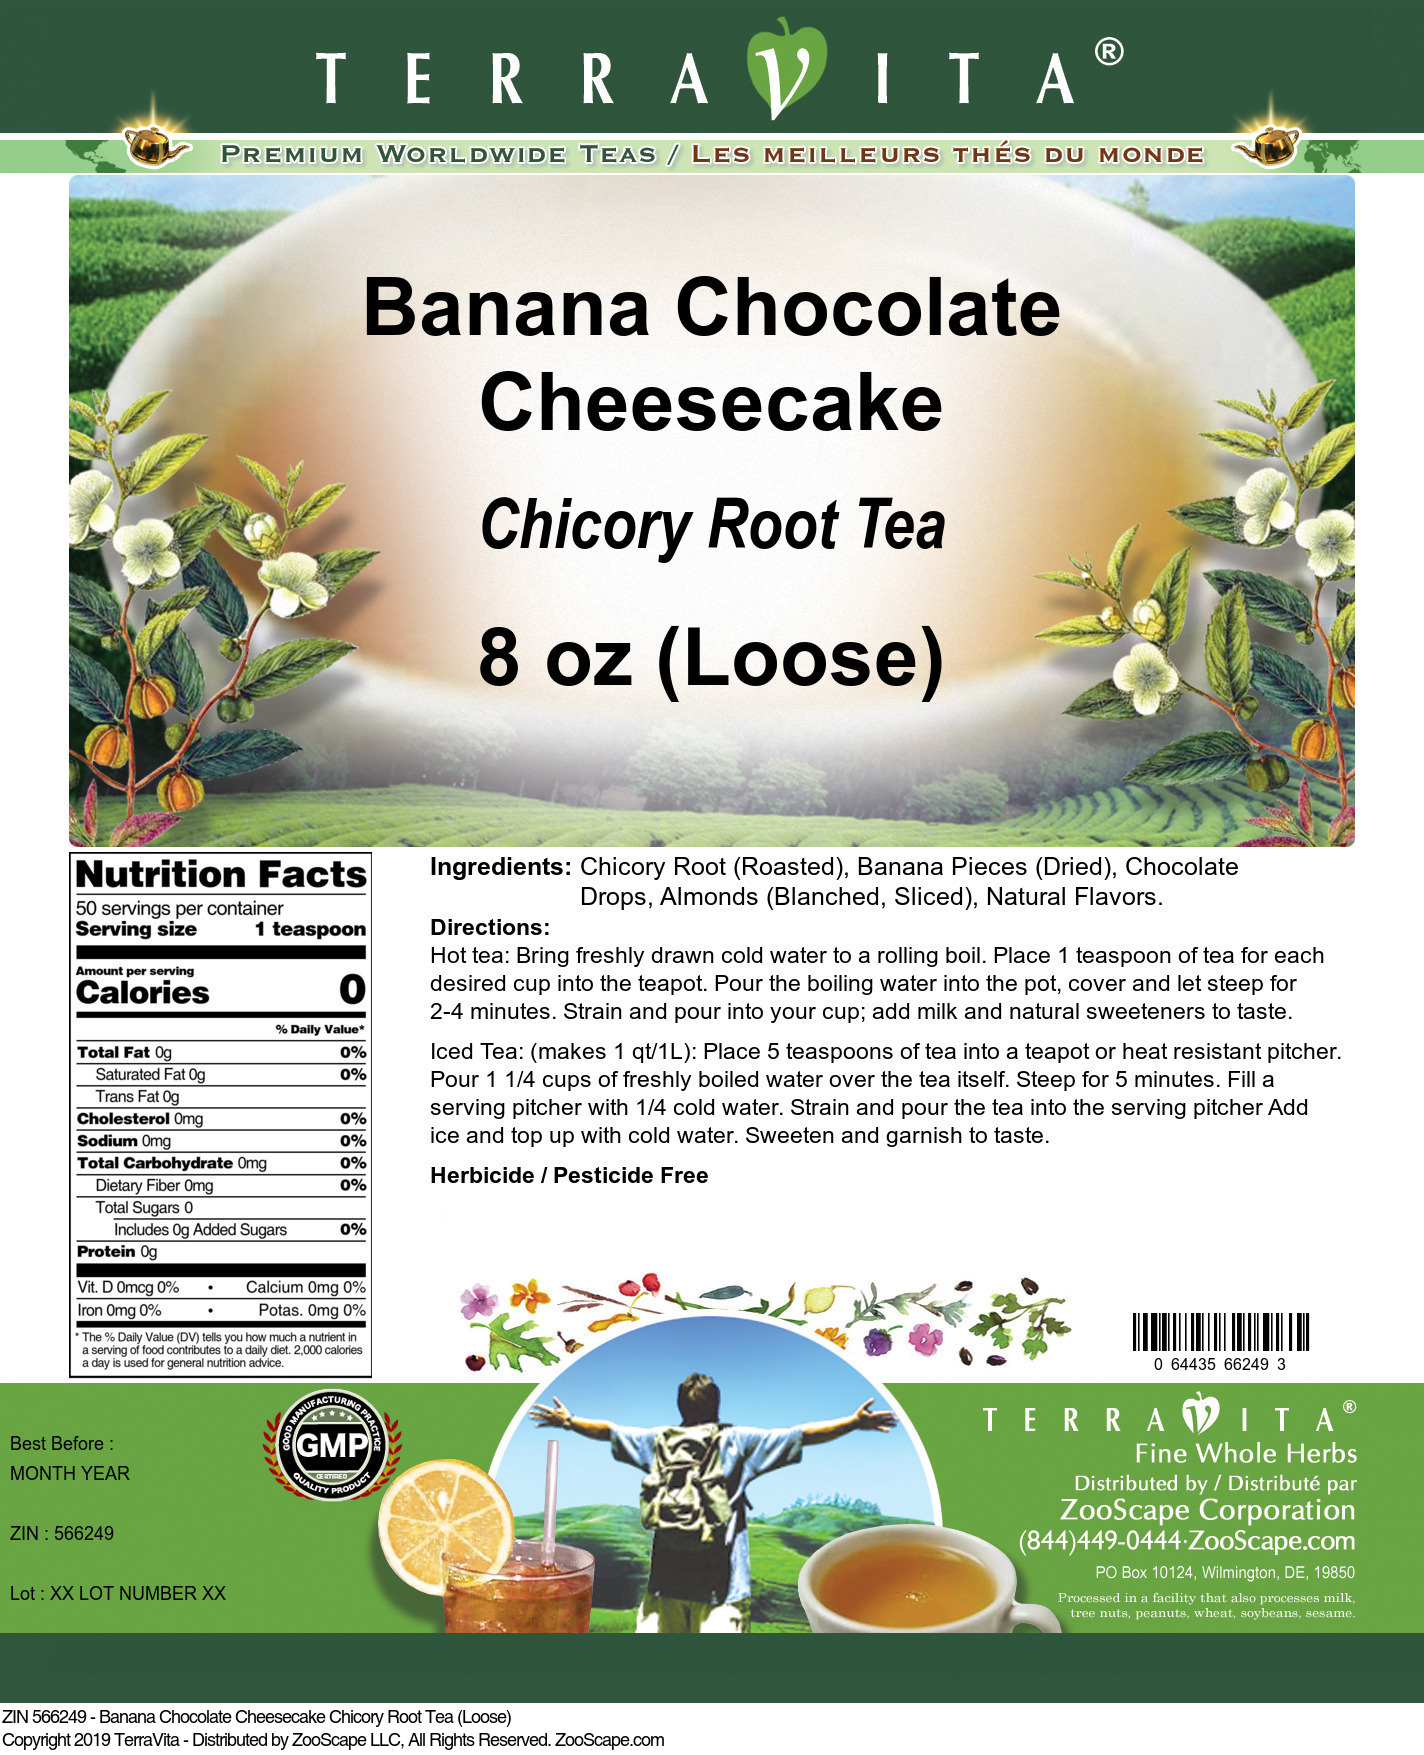 Banana Chocolate Cheesecake Chicory Root Tea (Loose) - Label